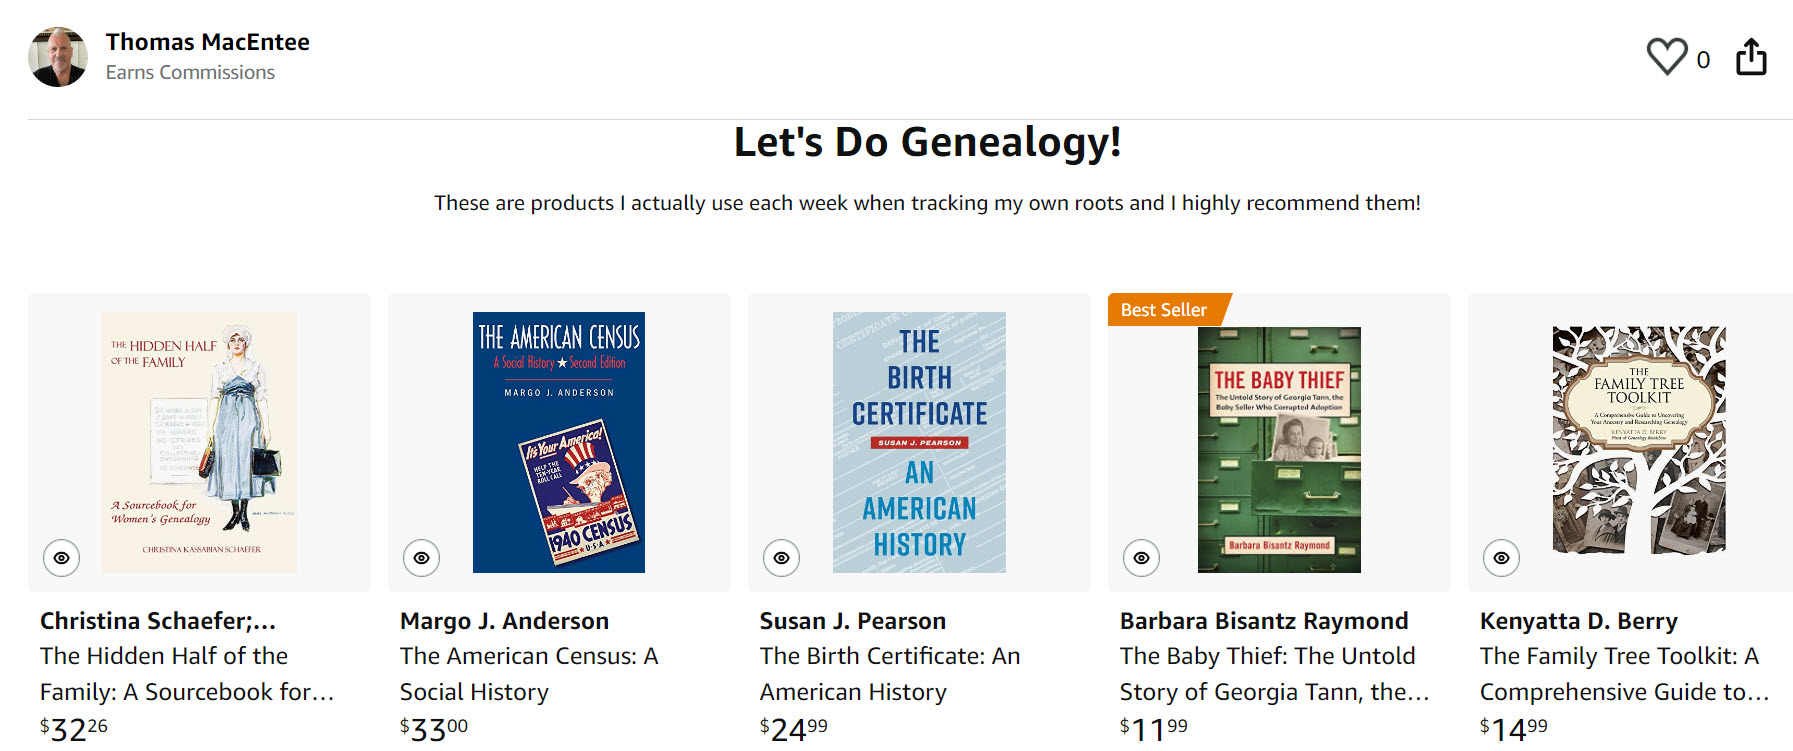 Genealogy Project Get Organized: Amazon List ... Let's Do Genealogy!